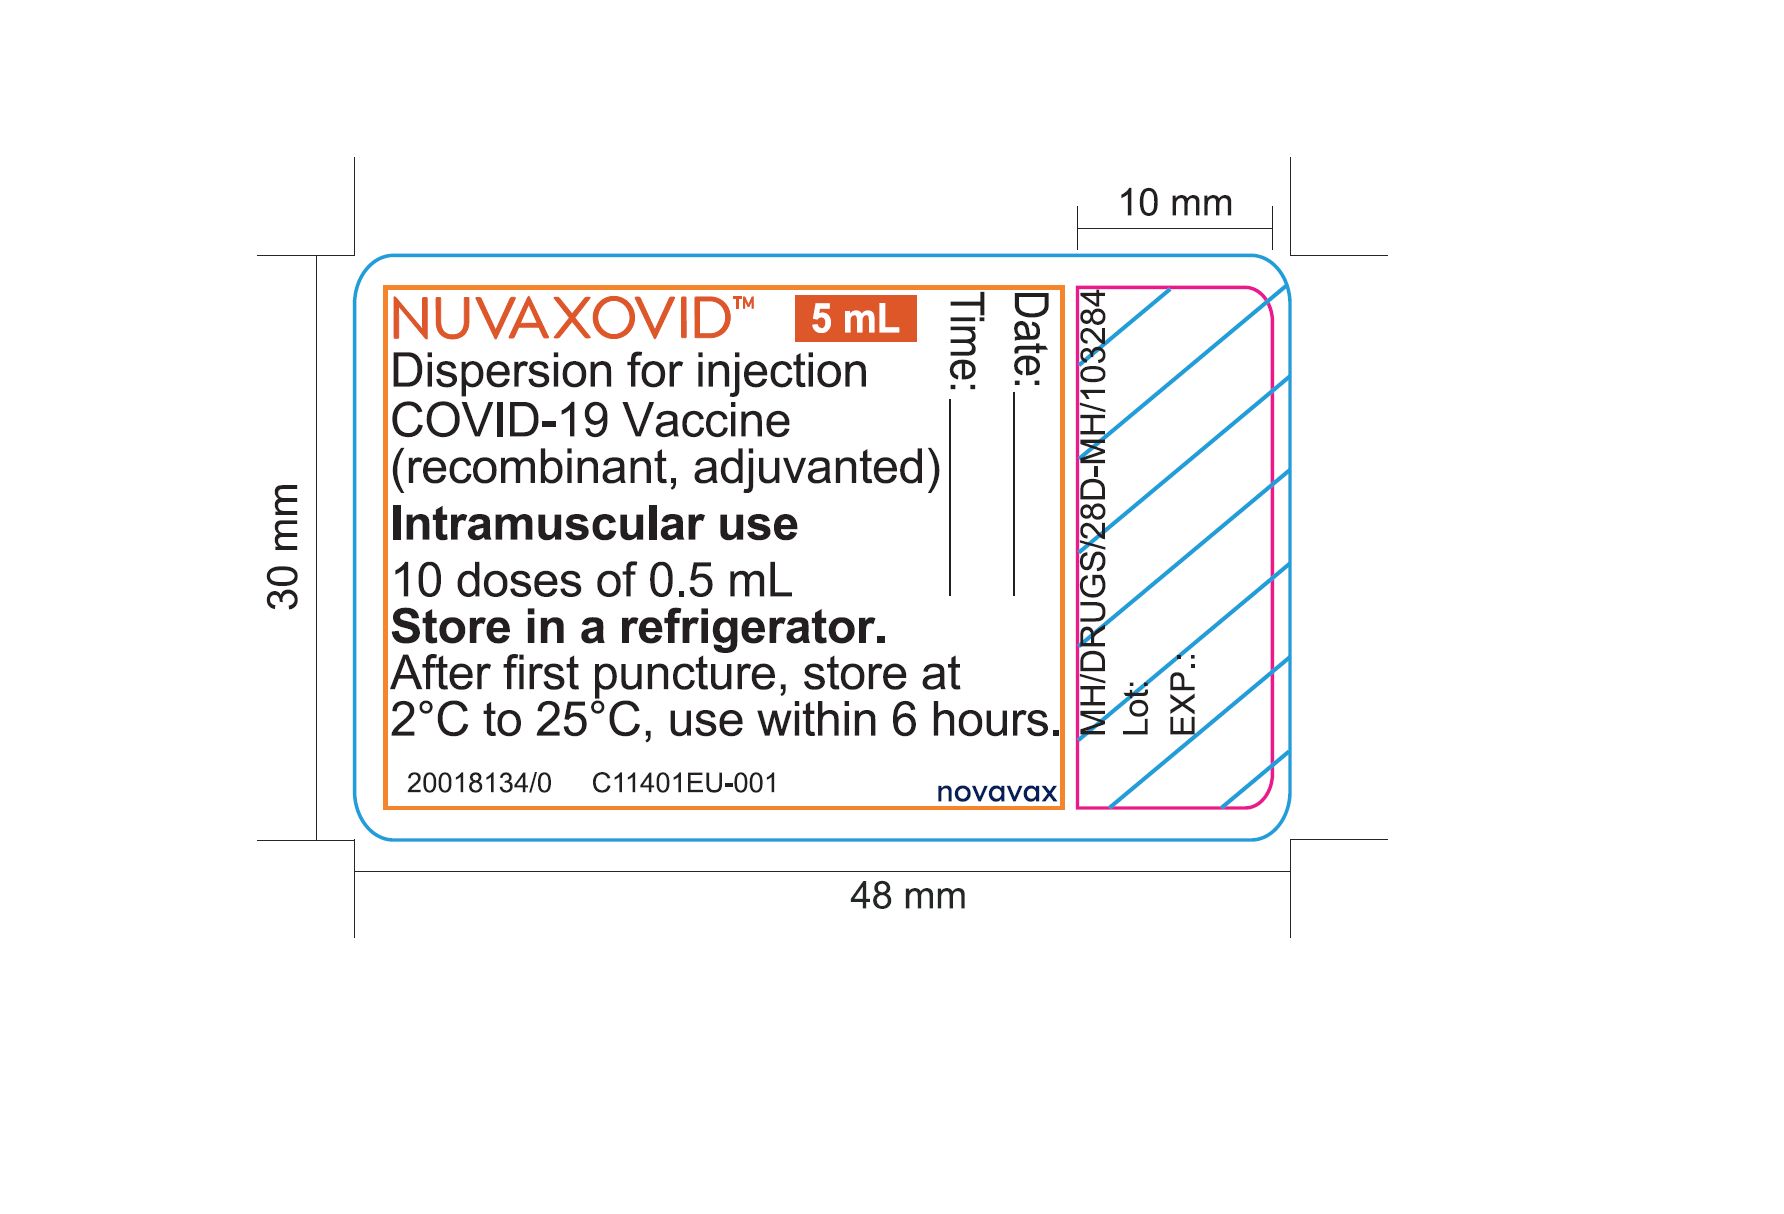 Vial label for NUVAXOVID